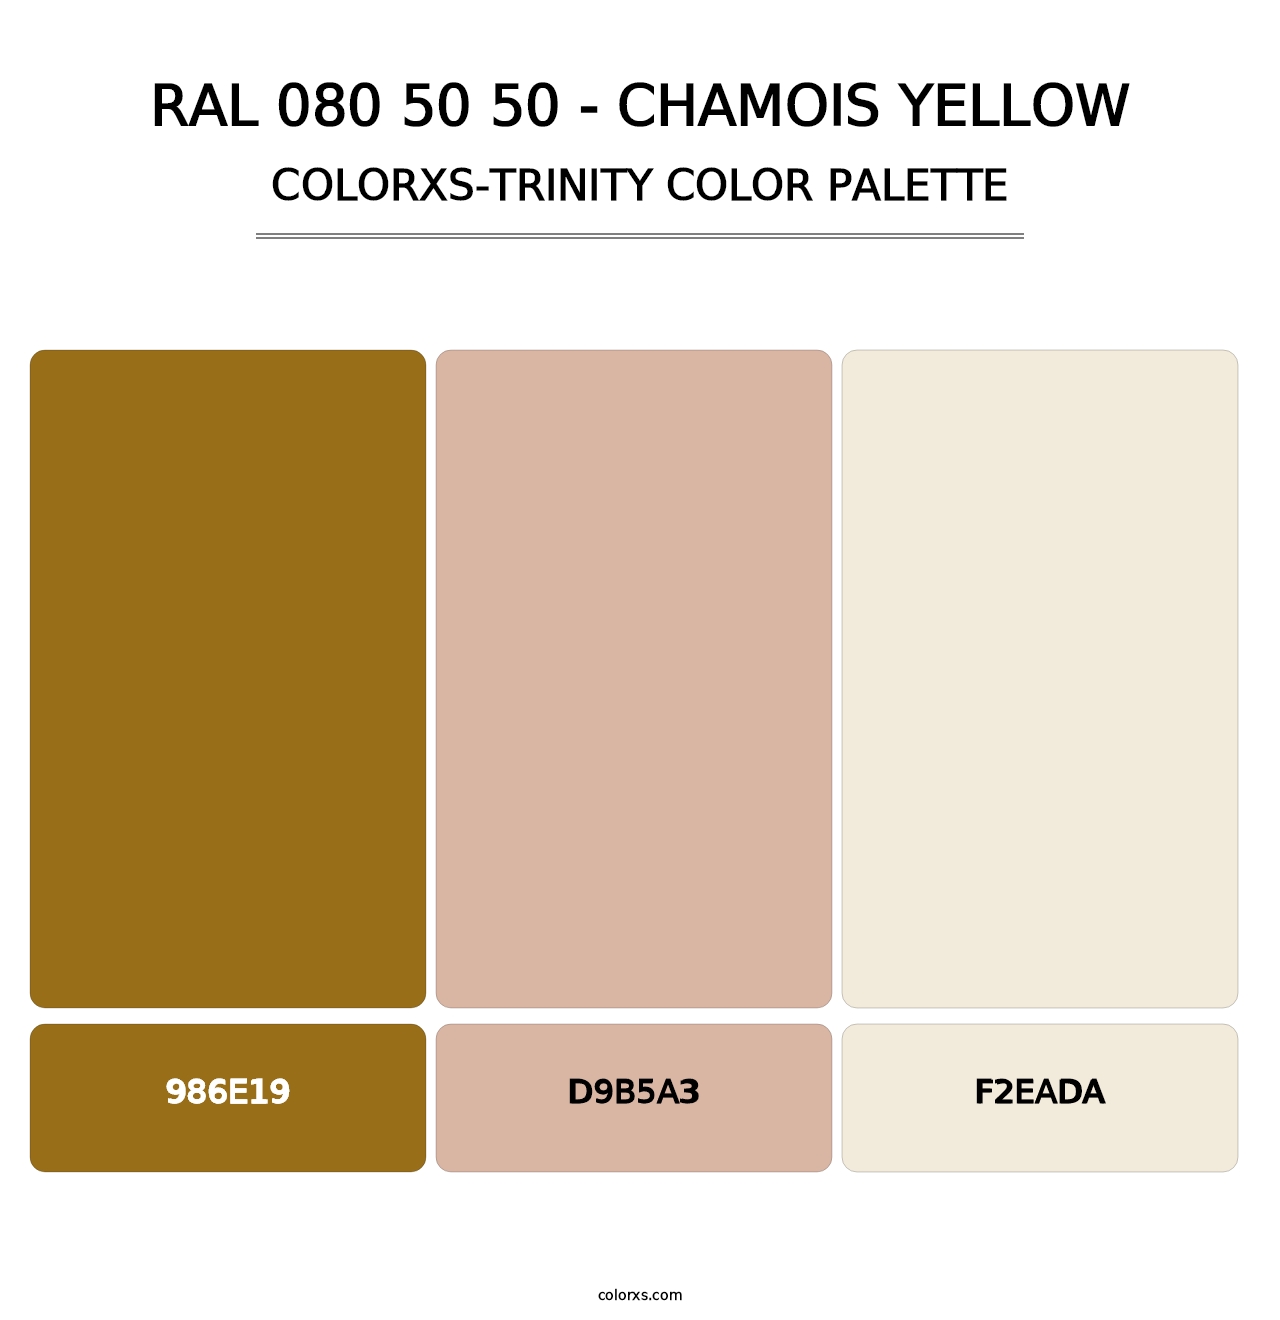 RAL 080 50 50 - Chamois Yellow - Colorxs Trinity Palette